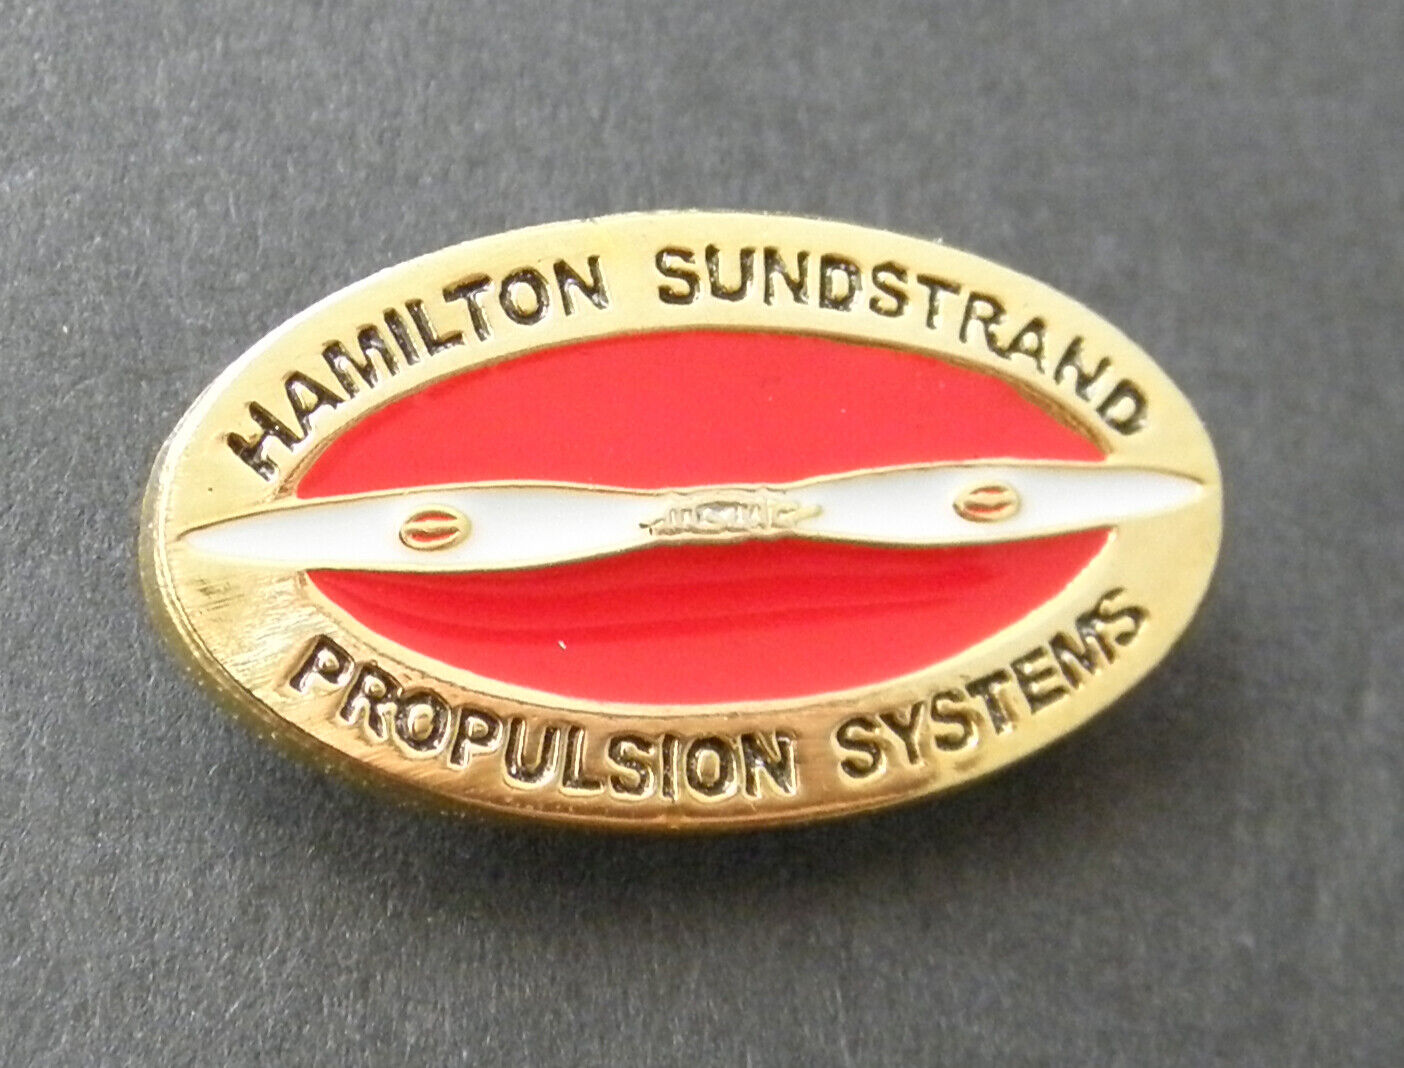 HAMILTON SUNDSTRAND PROPS PROPELLERS UTC AEROSPACE AVIATION LAPEL PIN BADGE 1